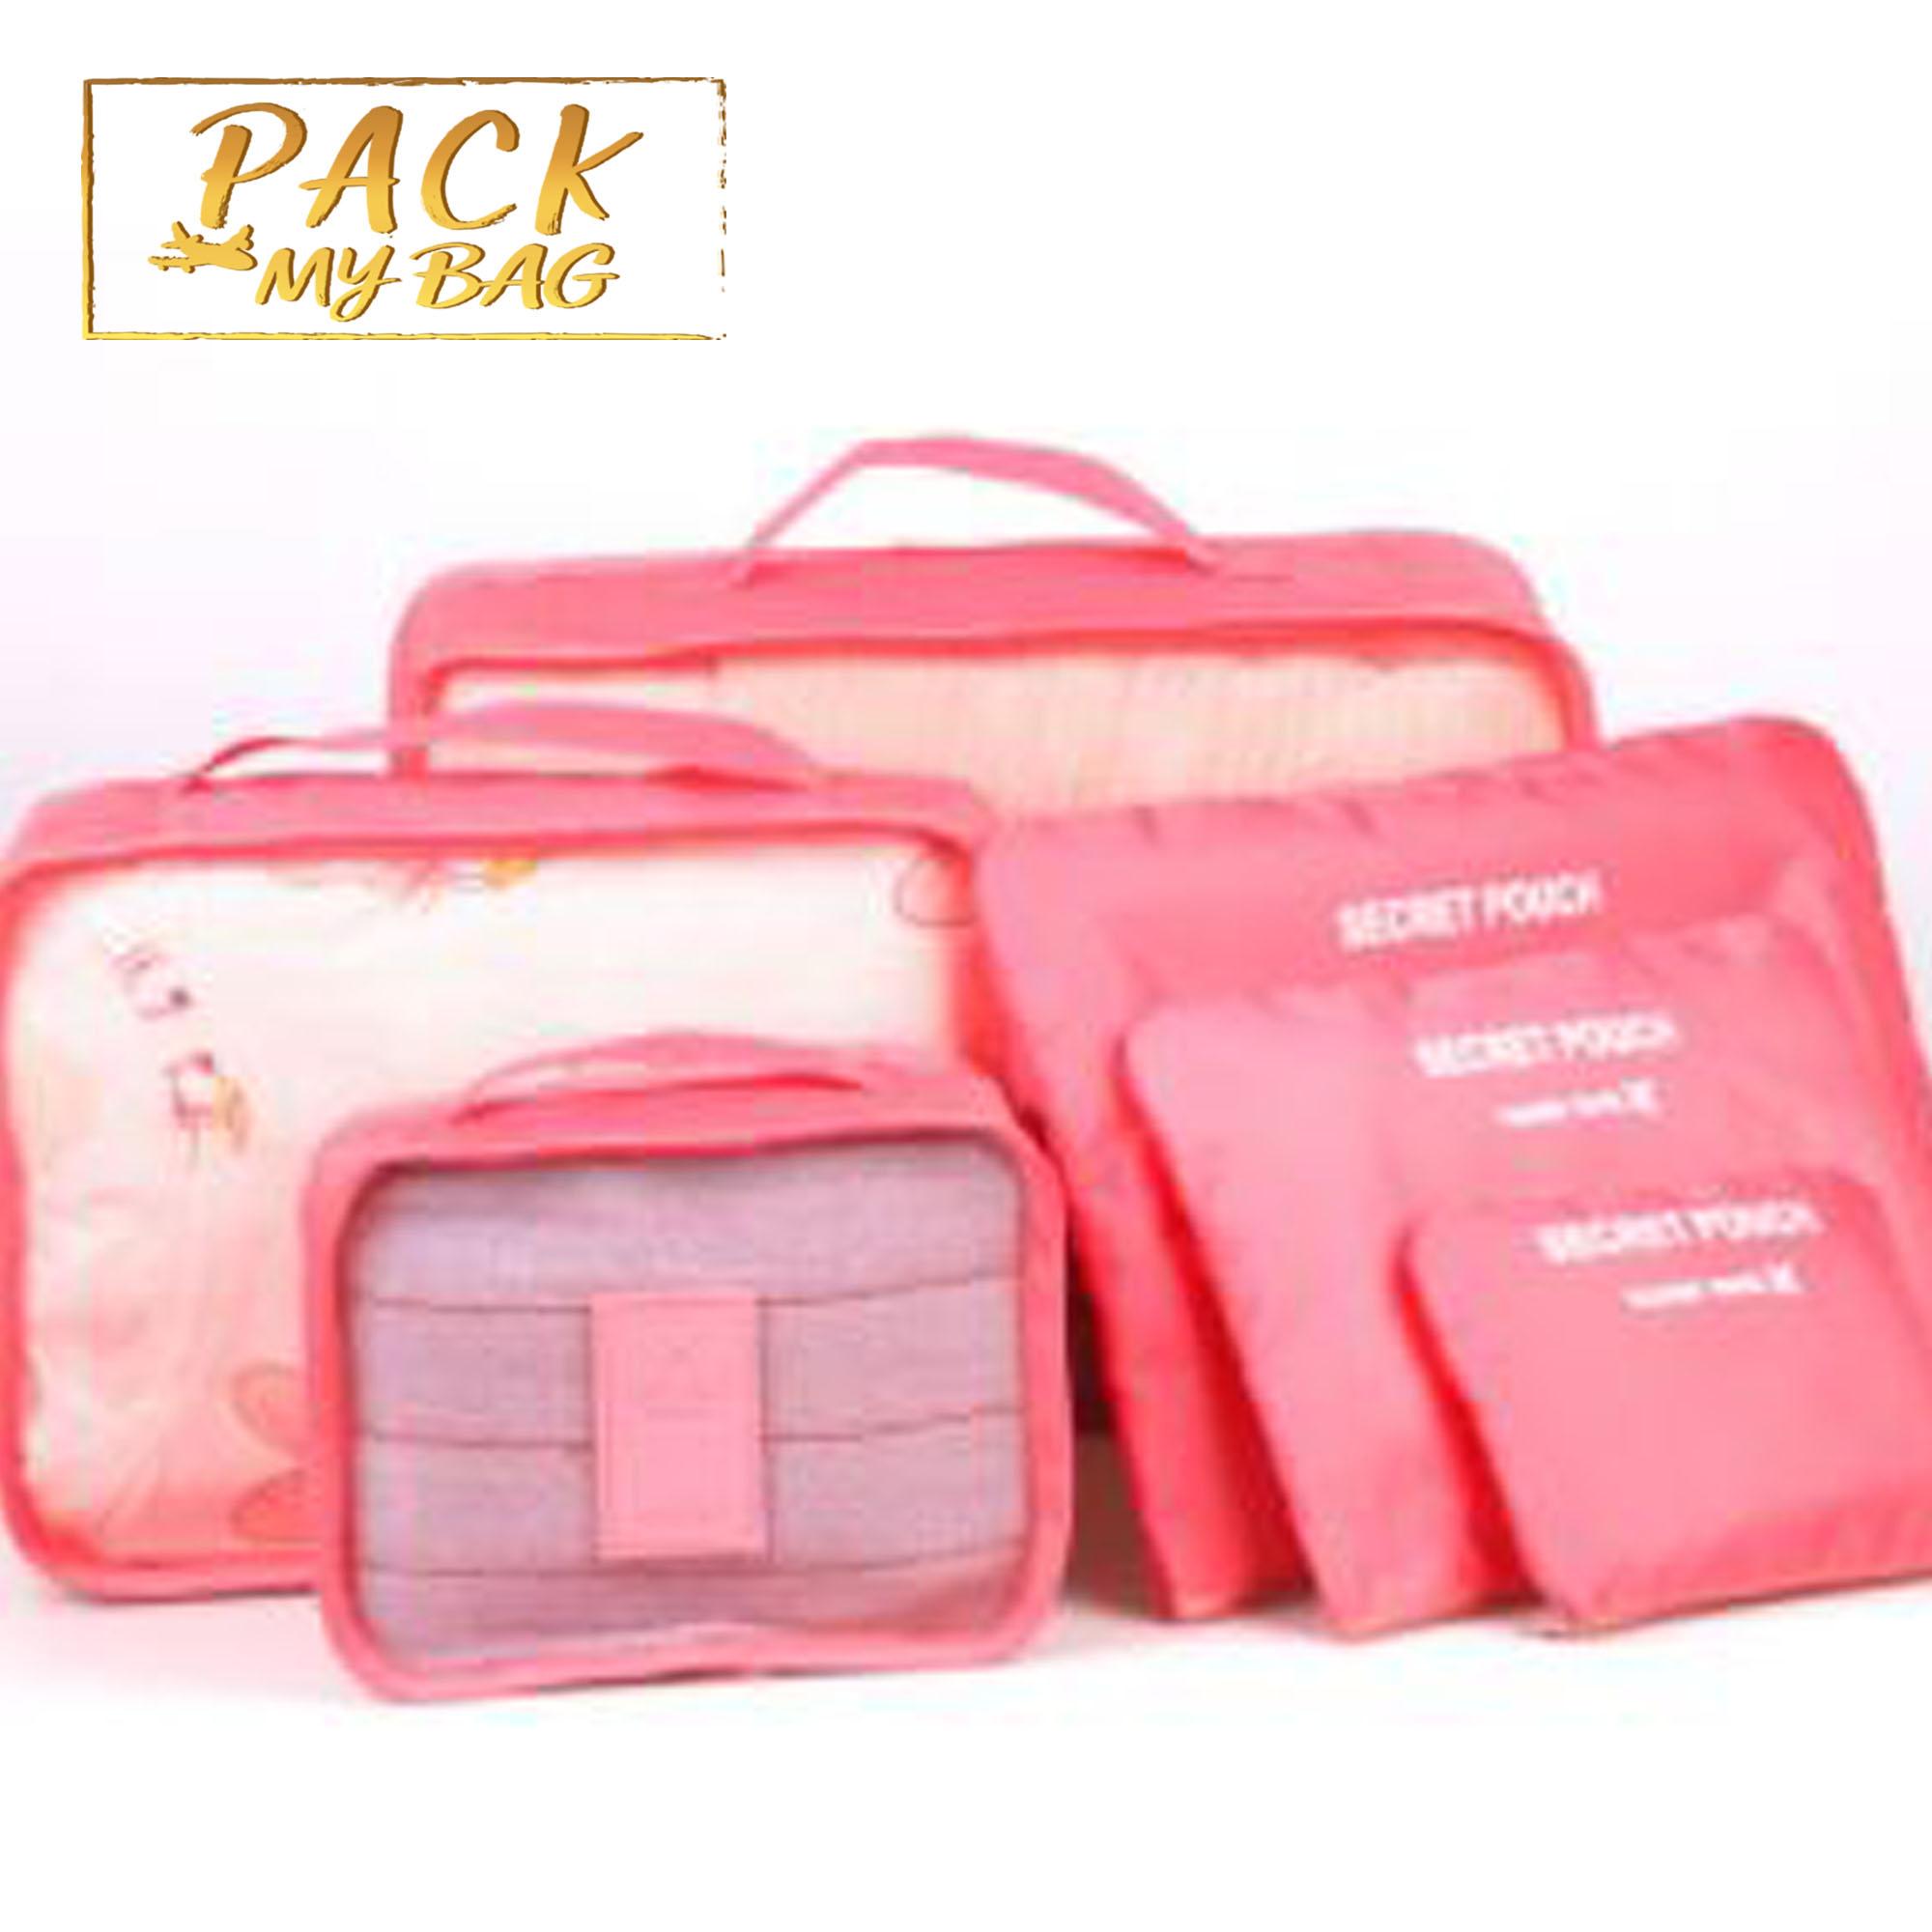 Pack My Bag กระเป๋าจัดระเบียบ สำหรับเดินทาง set 6 ชิ้น ใส่ได้หลายอย่าง หลากหลายสี-Travel Bag Organizer-801026